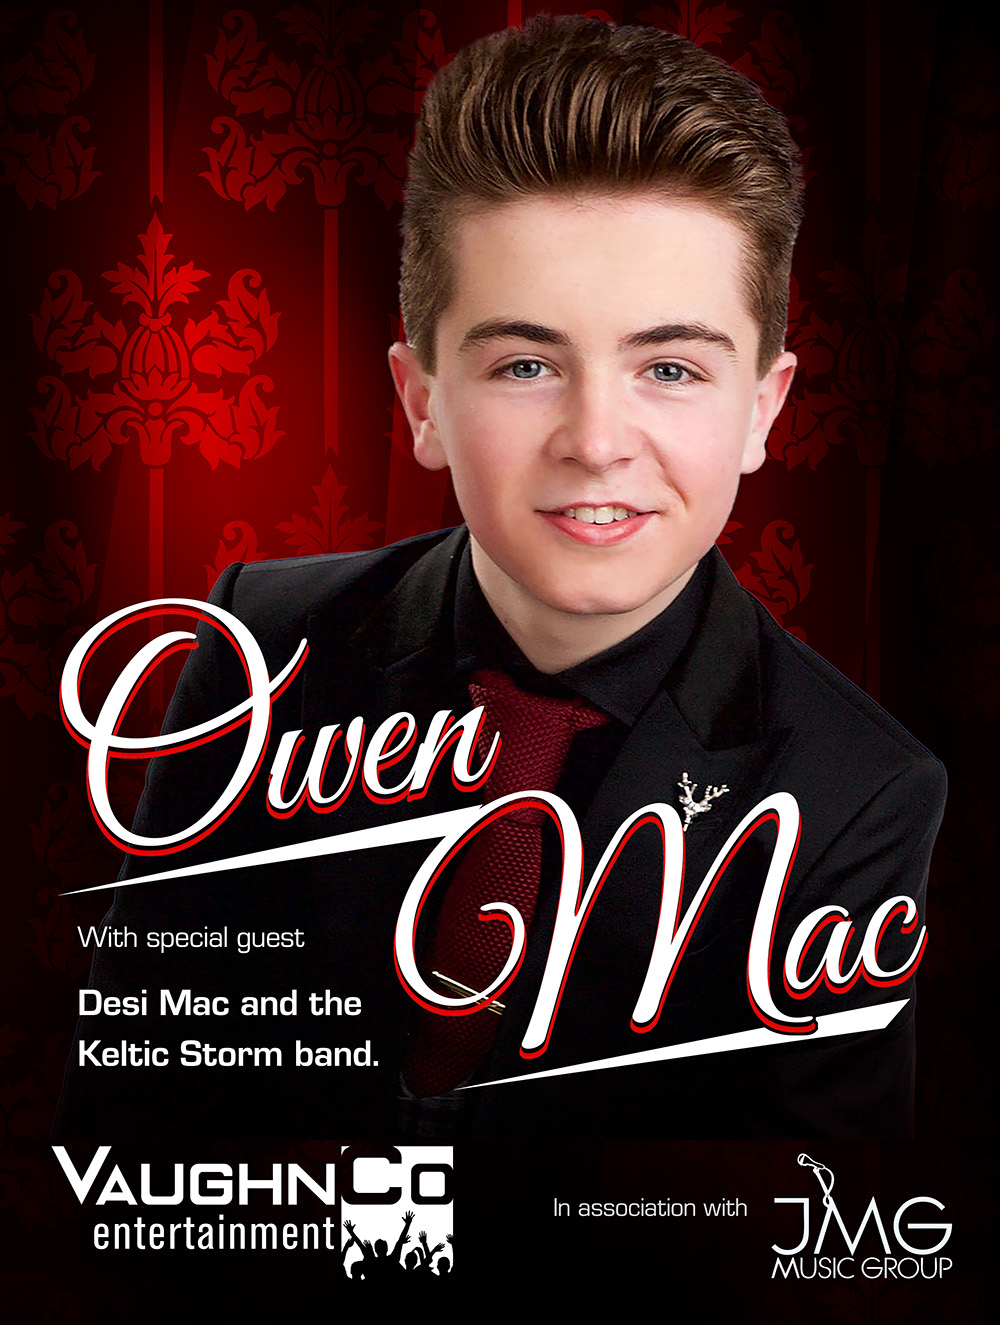 Mac owen